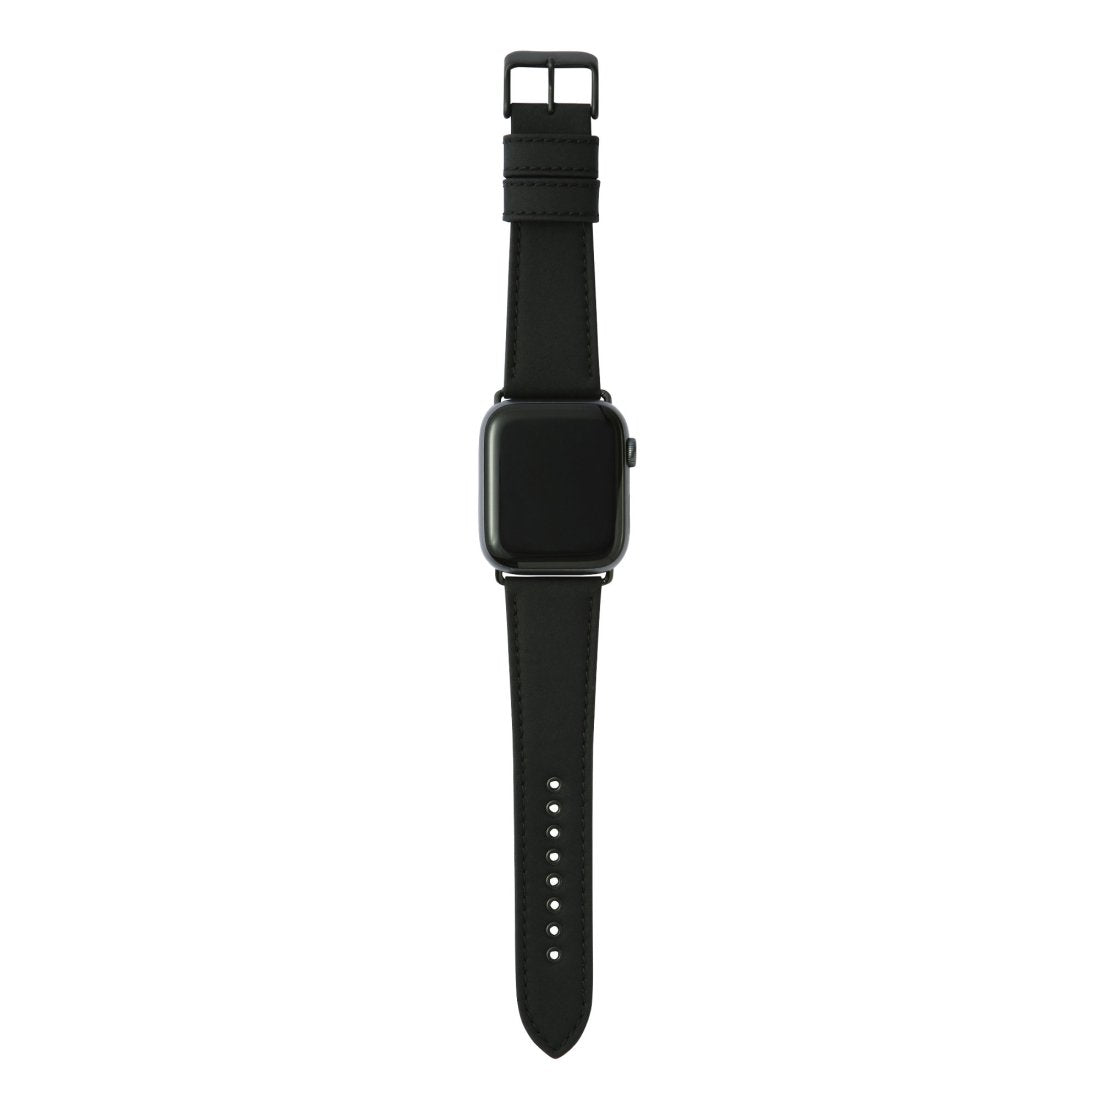 RAMIDUS / “BLACK BEAUTY” Apple Watch STRAP